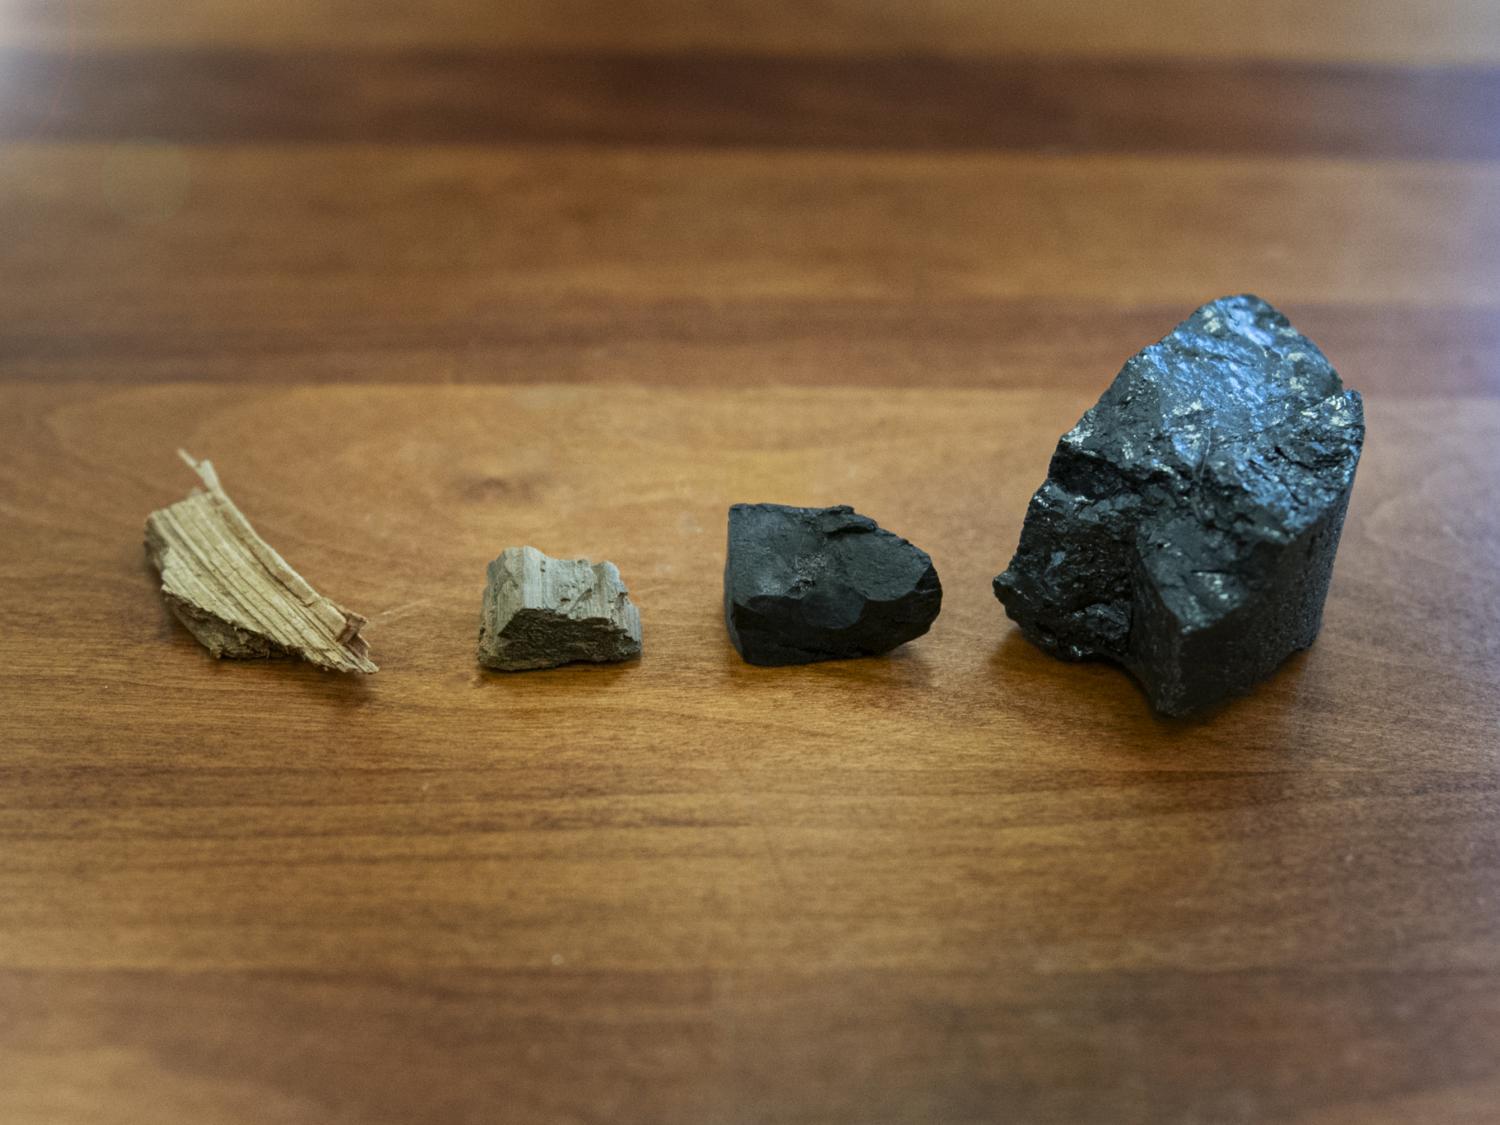 Wood, lignite, subbituminous and bituminous coal